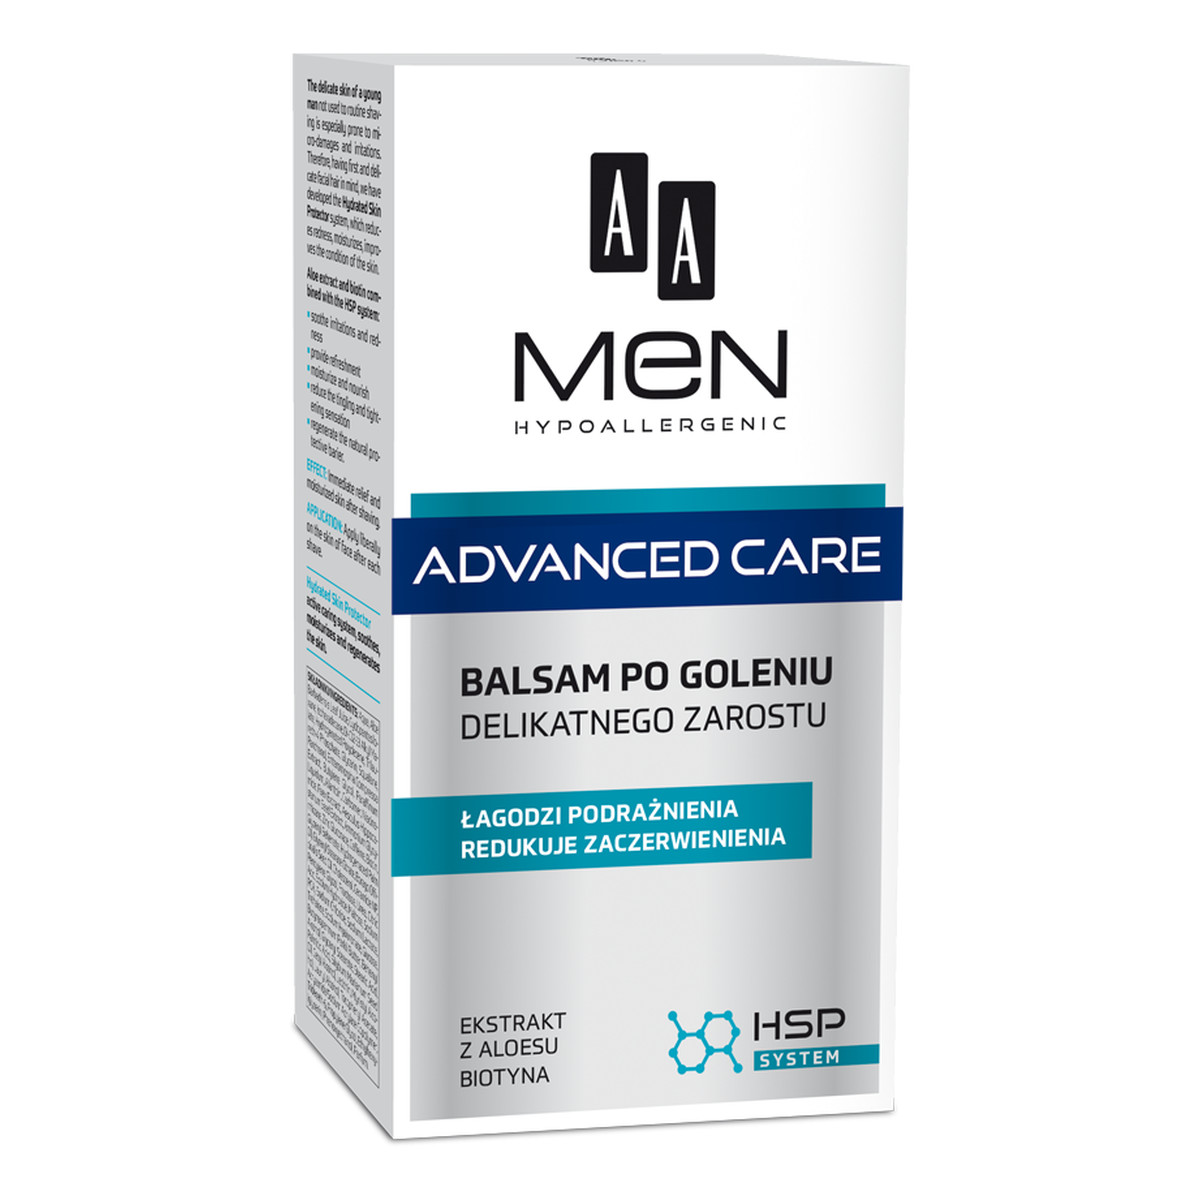 AA Men Advanced Care Balsam Po Goleniu Delikatnego Zarostu 100ml